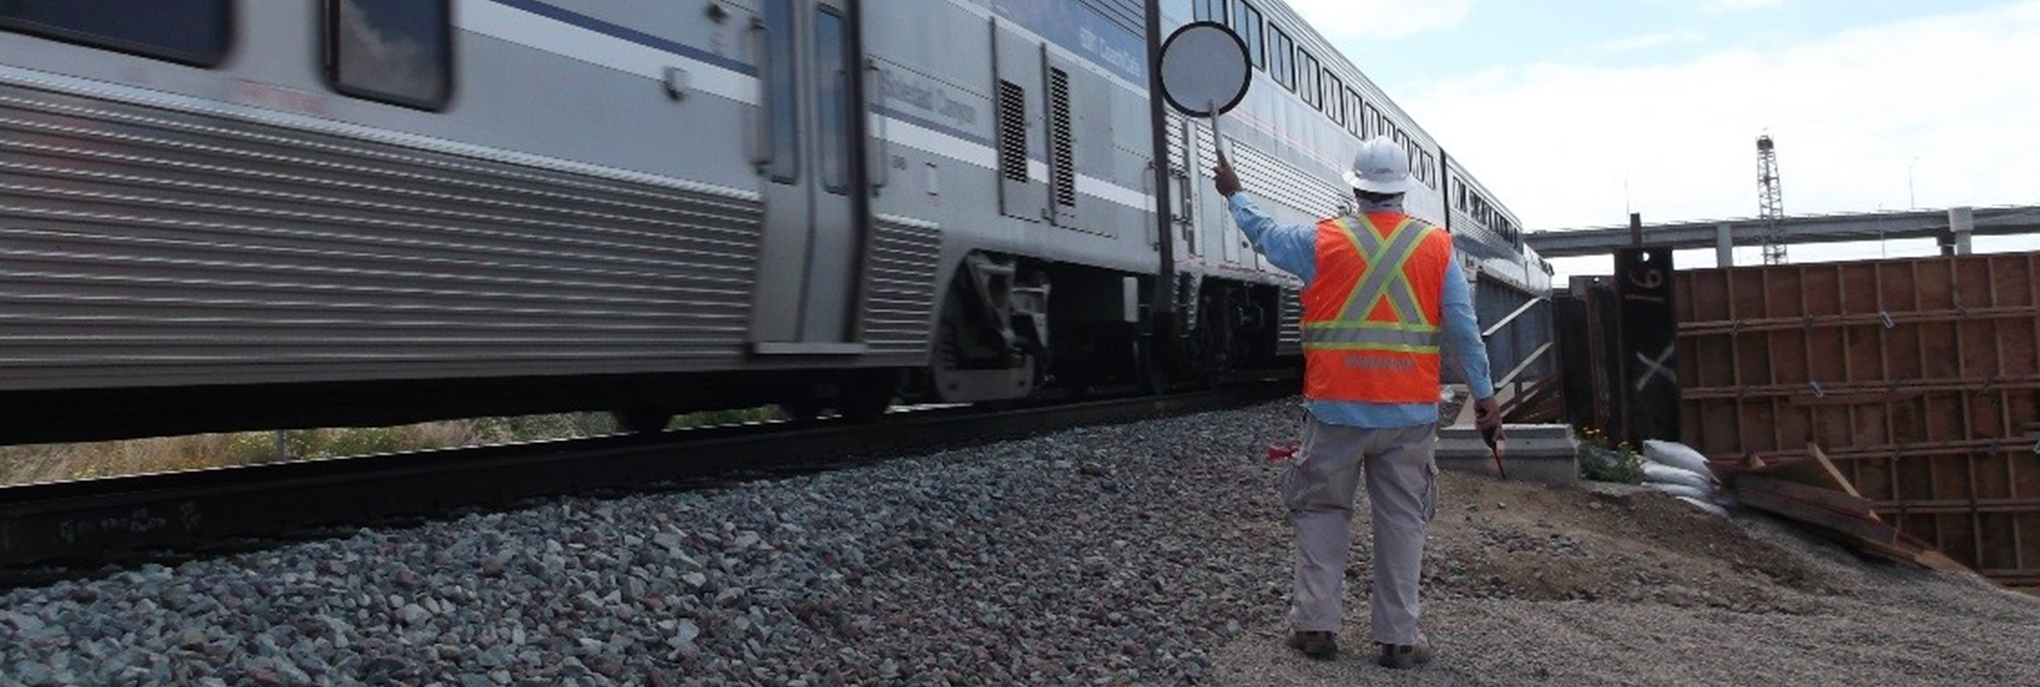 Railroad Flagger directing a train in a rail yard